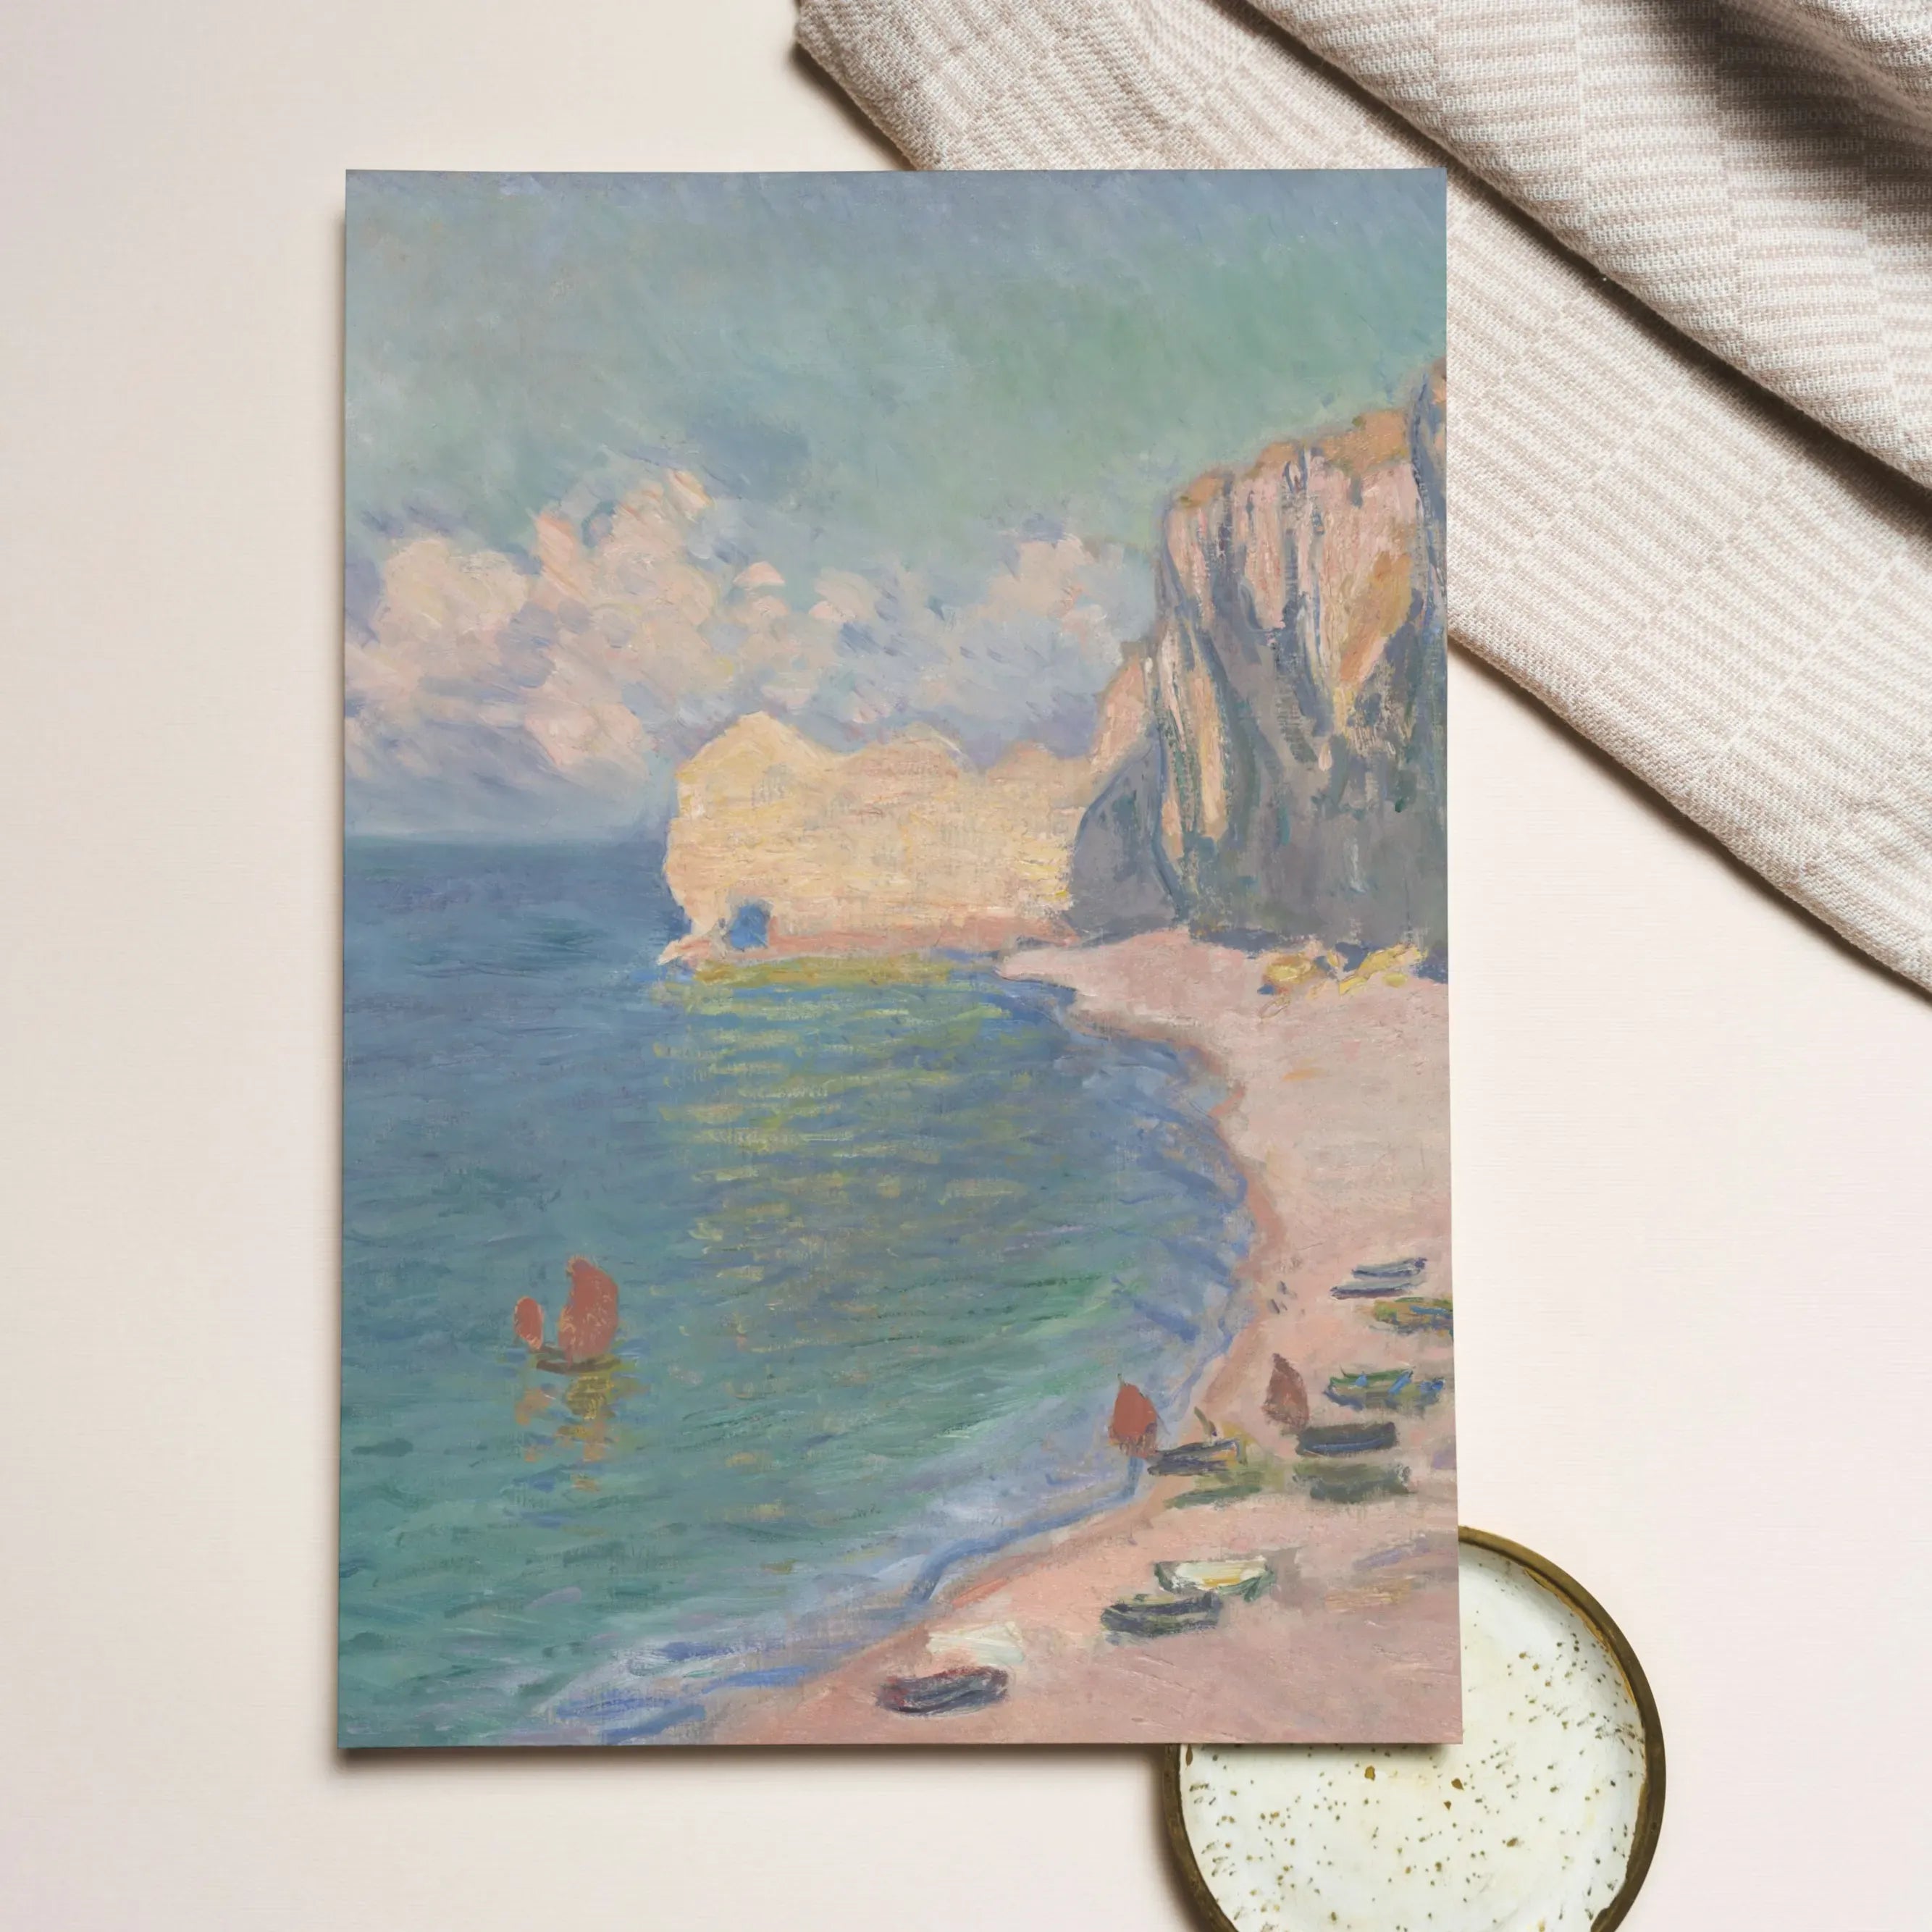 étretat By Claude Monet Greeting Card - Notebooks & Notepads - Aesthetic Art